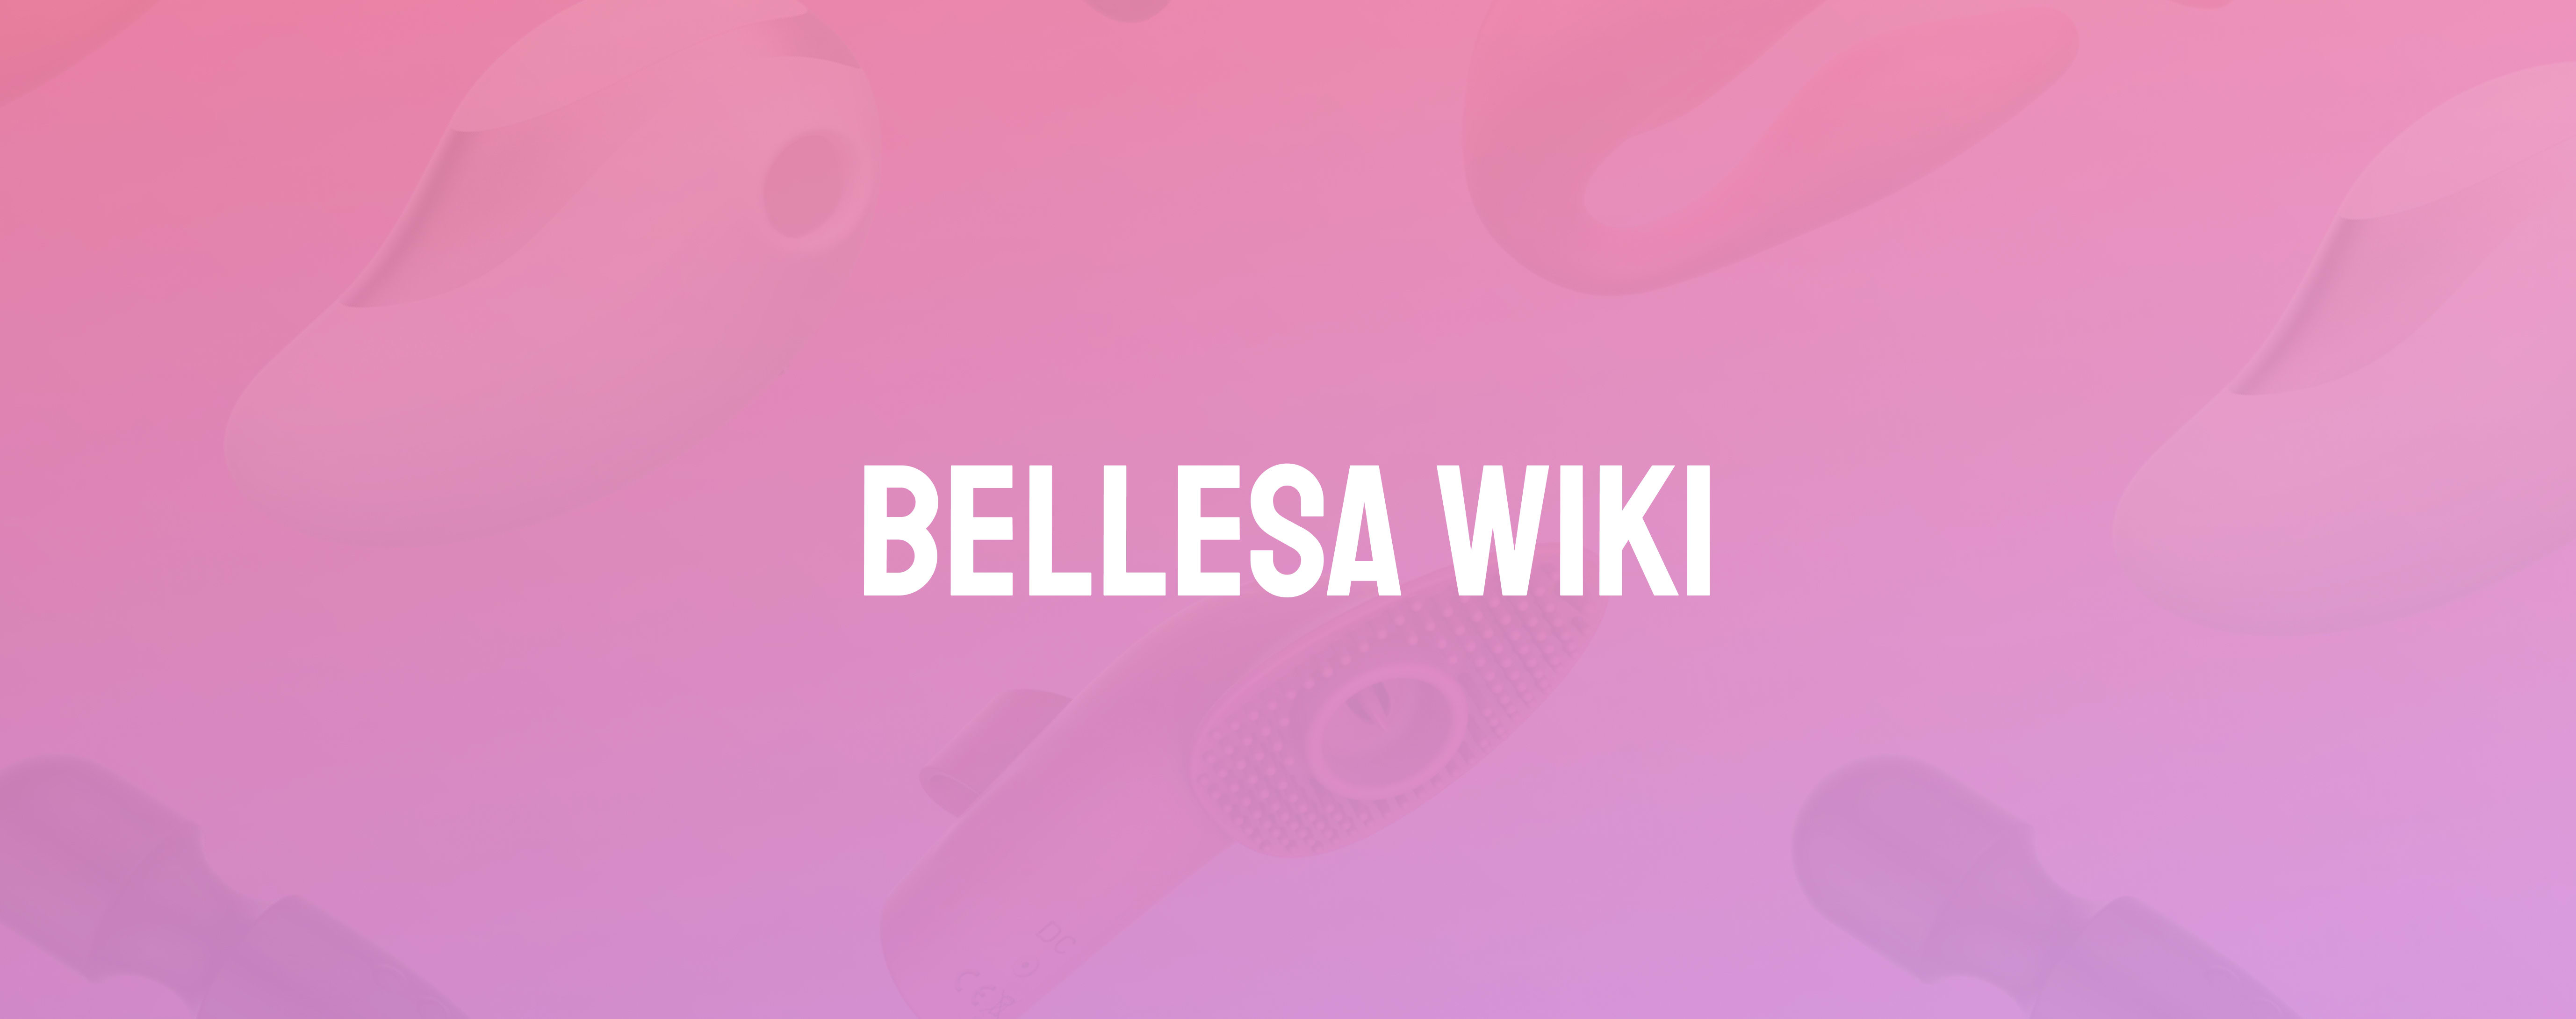 Cuckolding - Bellesa Wiki Sex Toys Blog picture pic